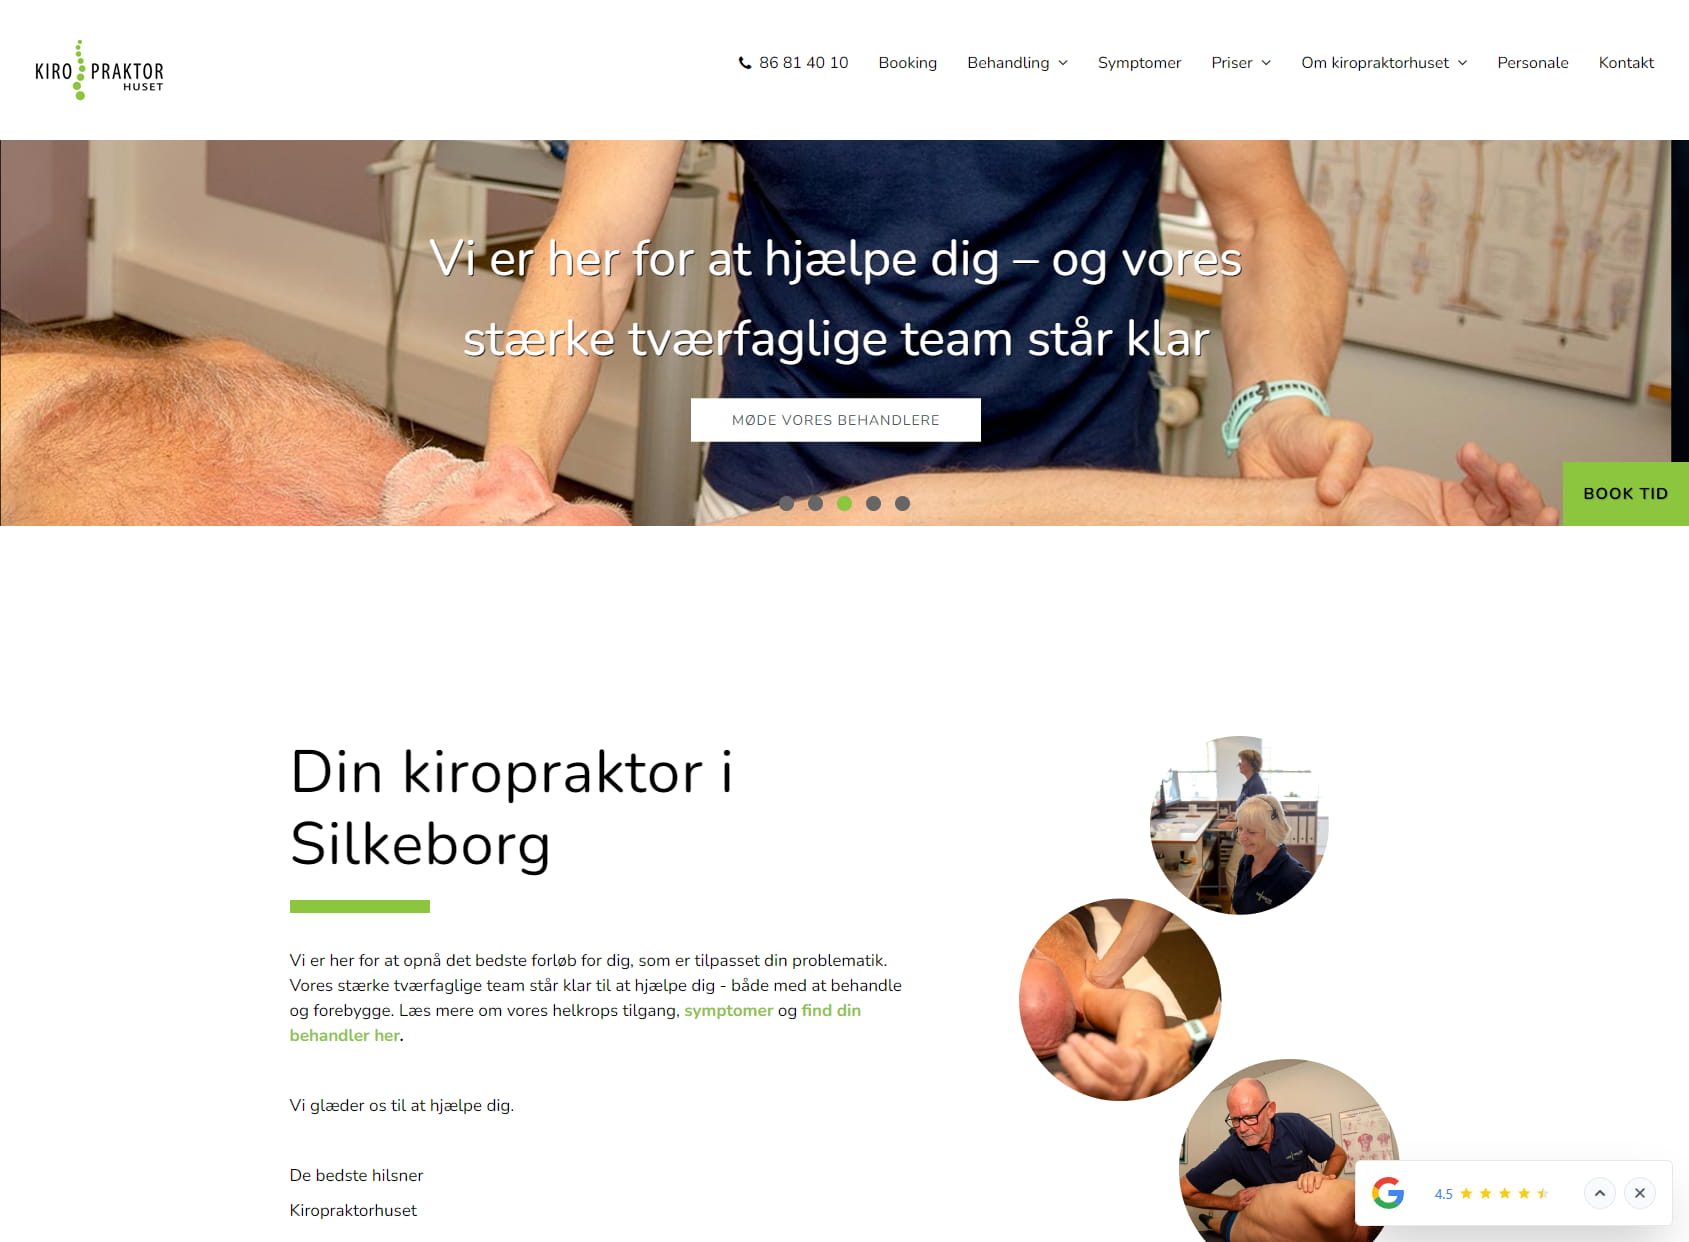 Kiropraktor - Kiropraktorhuset Silkeborg